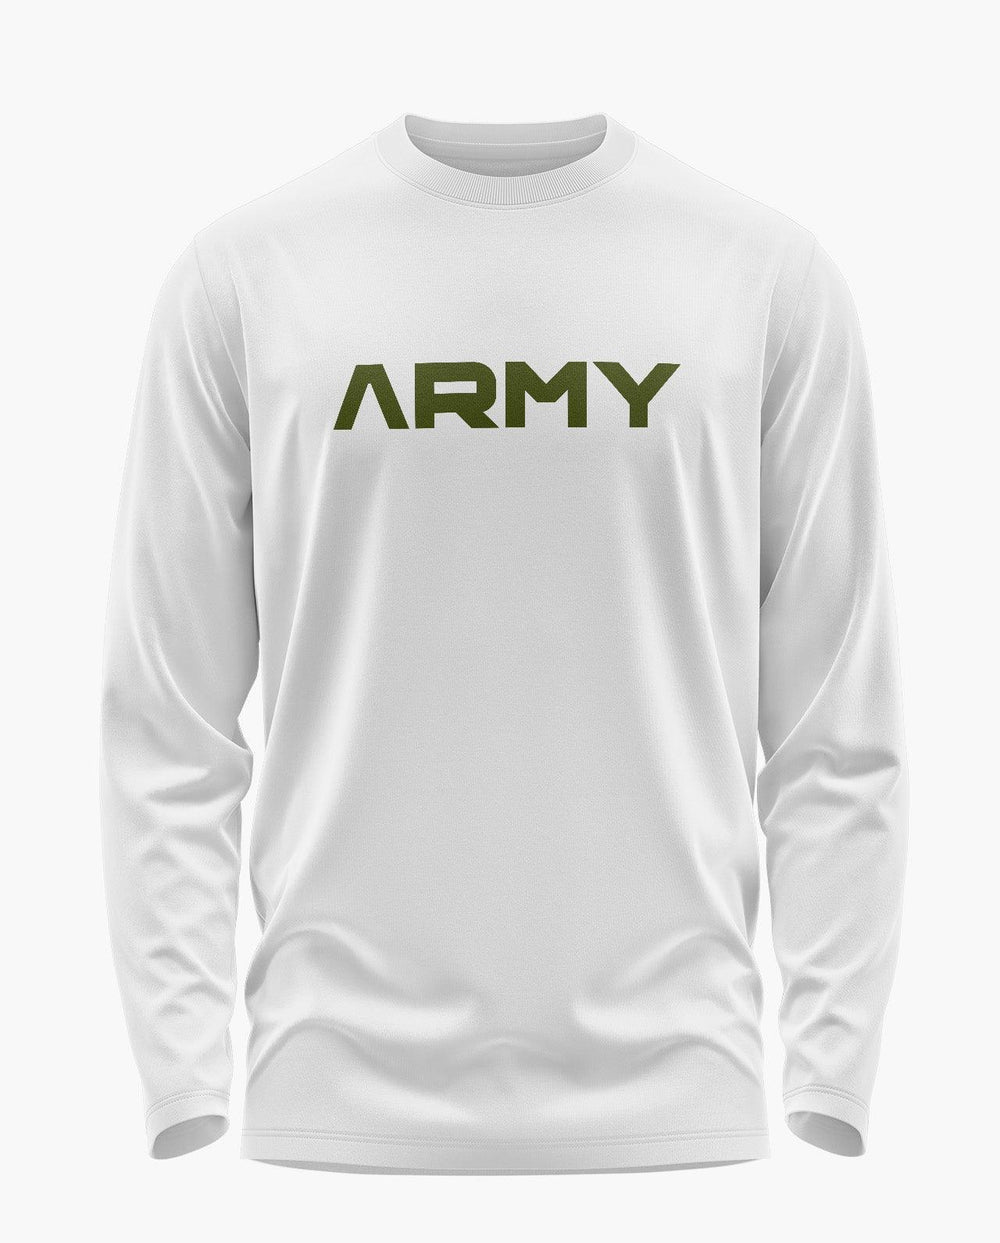 Army pride Full Sleeve T-Shirt - Aero Armour